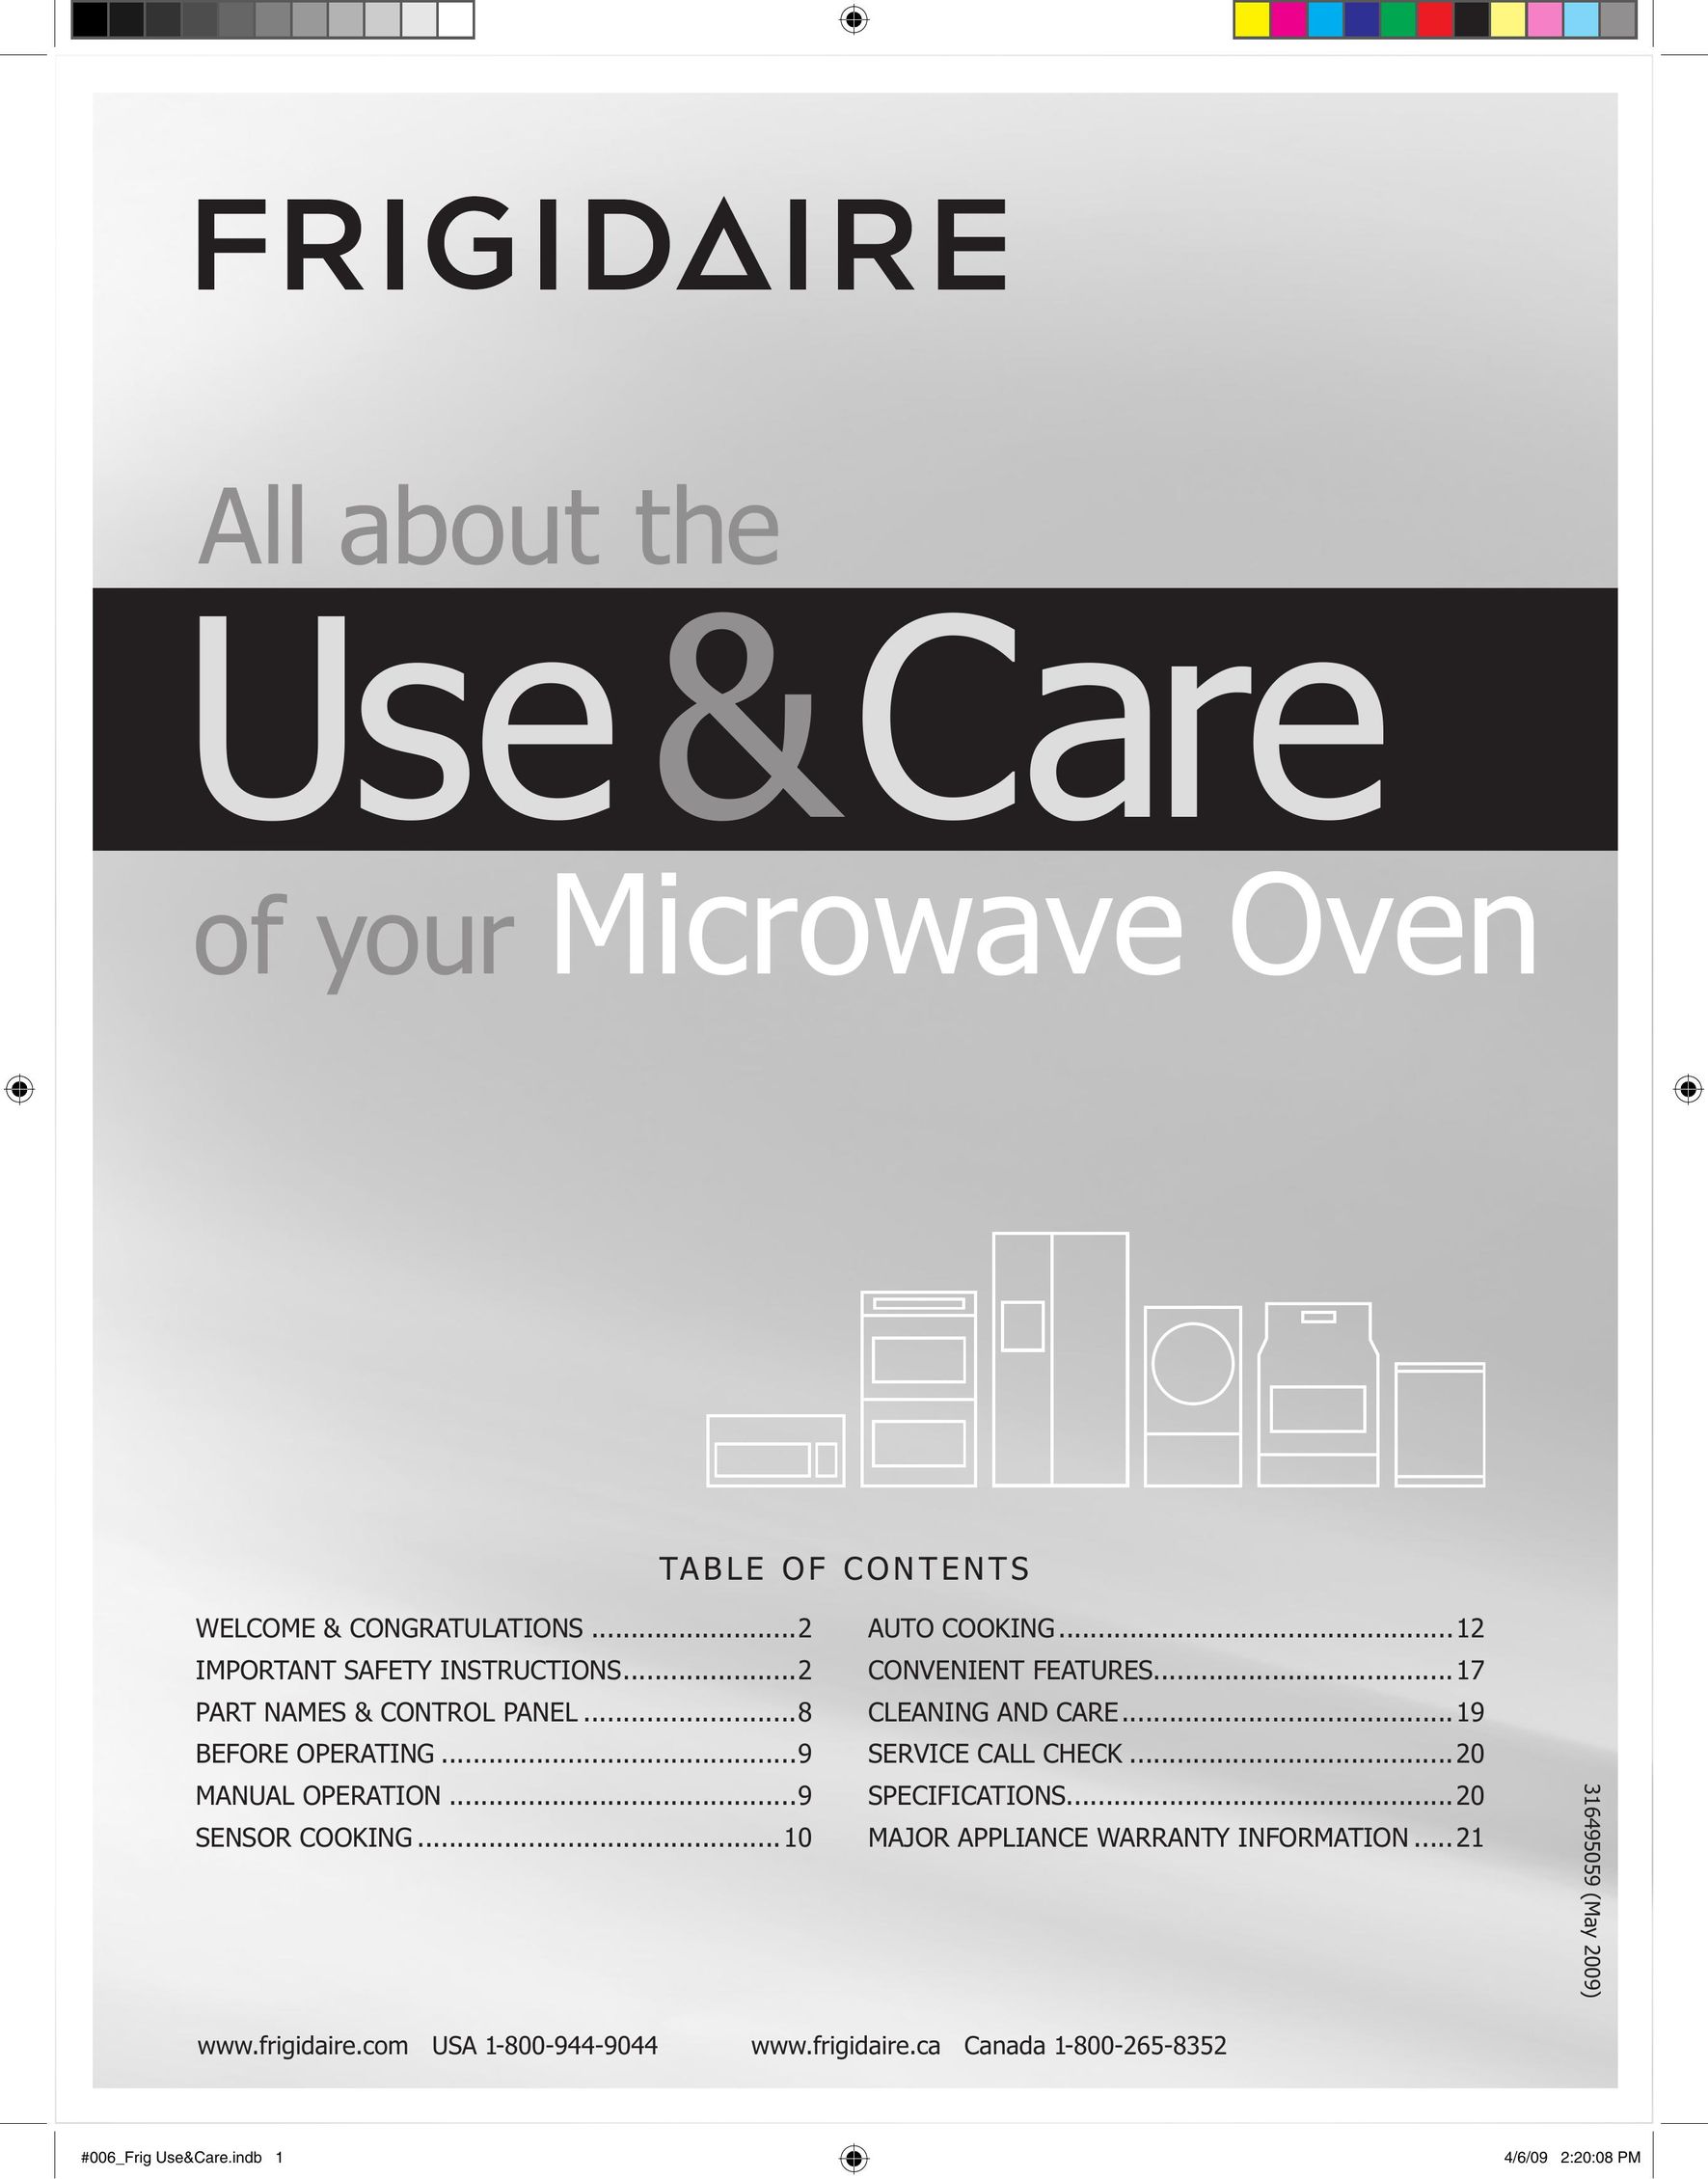 Frigidaire CGMO205 Microwave Oven User Manual